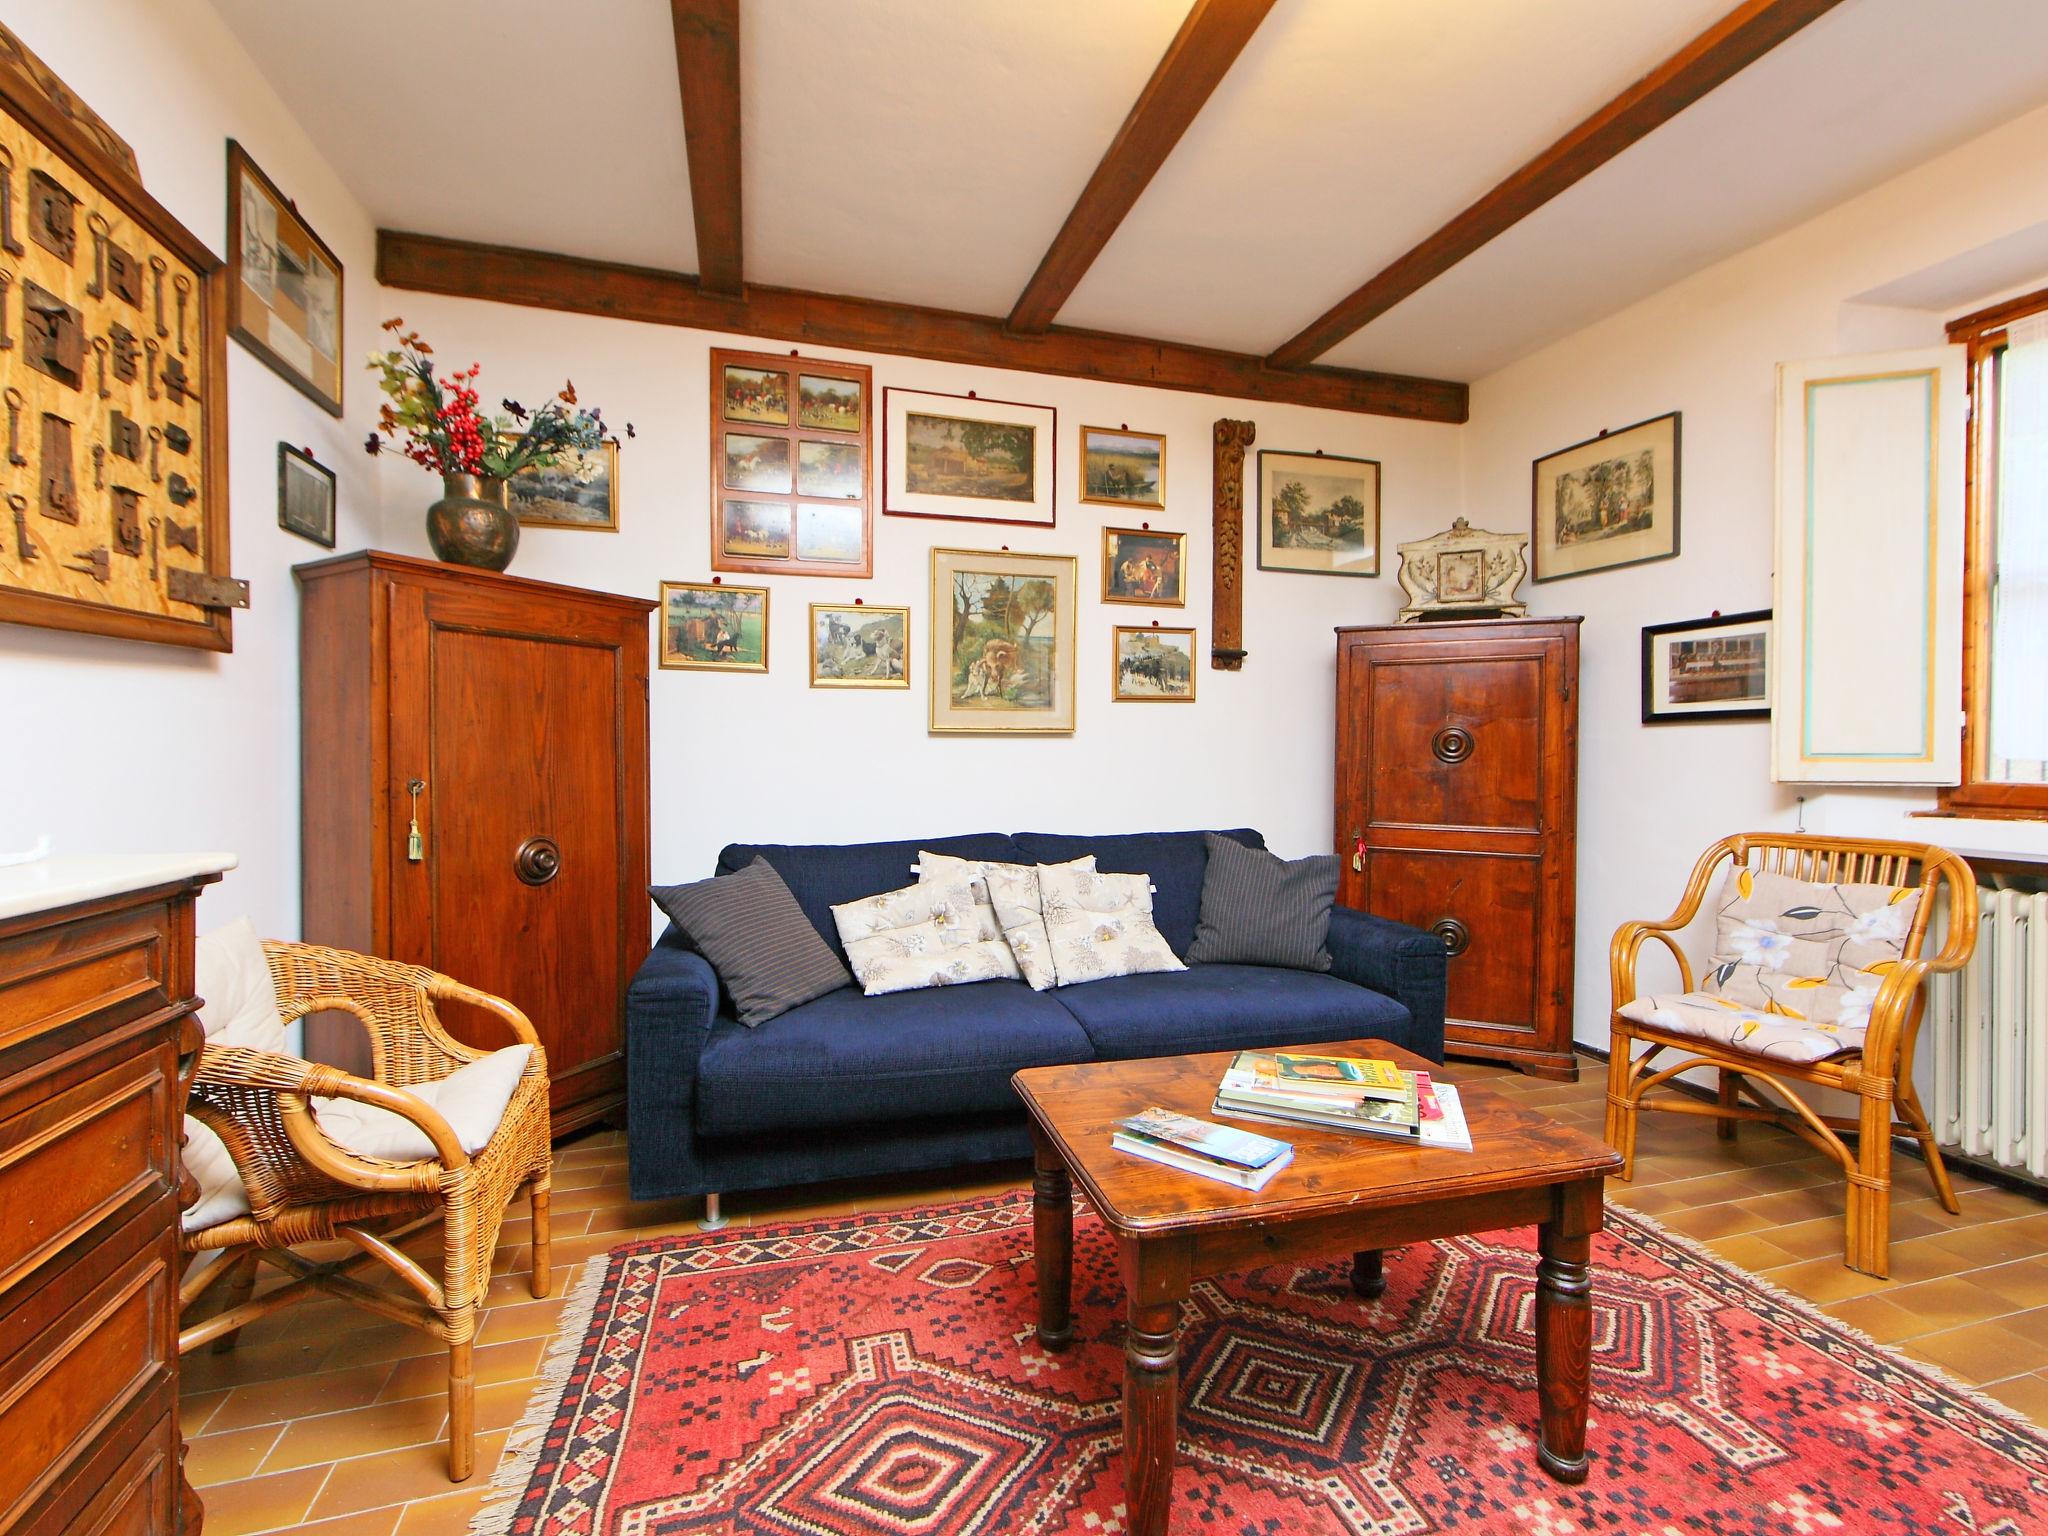 Photo 3 - Appartement de 2 chambres à San Casciano in Val di Pesa avec jardin et terrasse